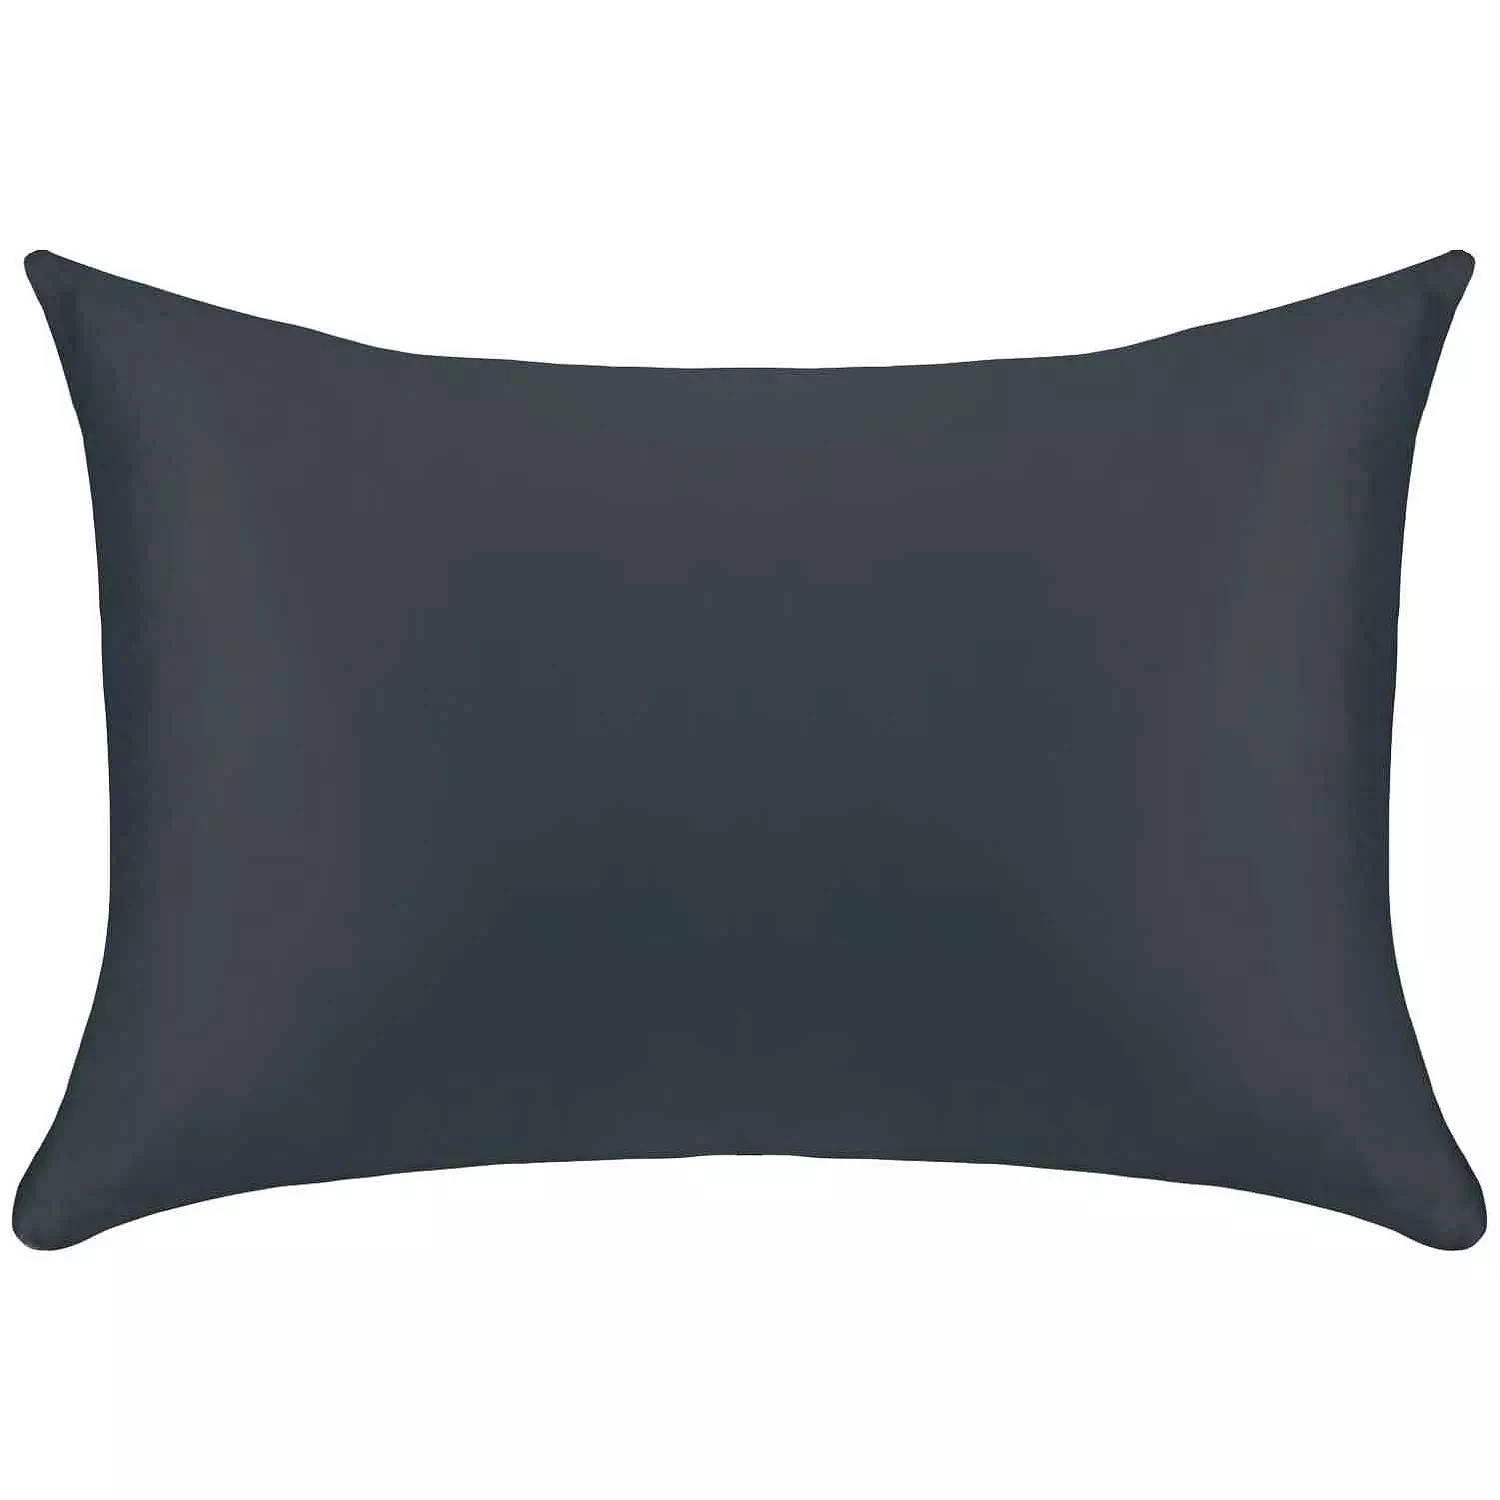 Black satin pillowcases, pk. of 2